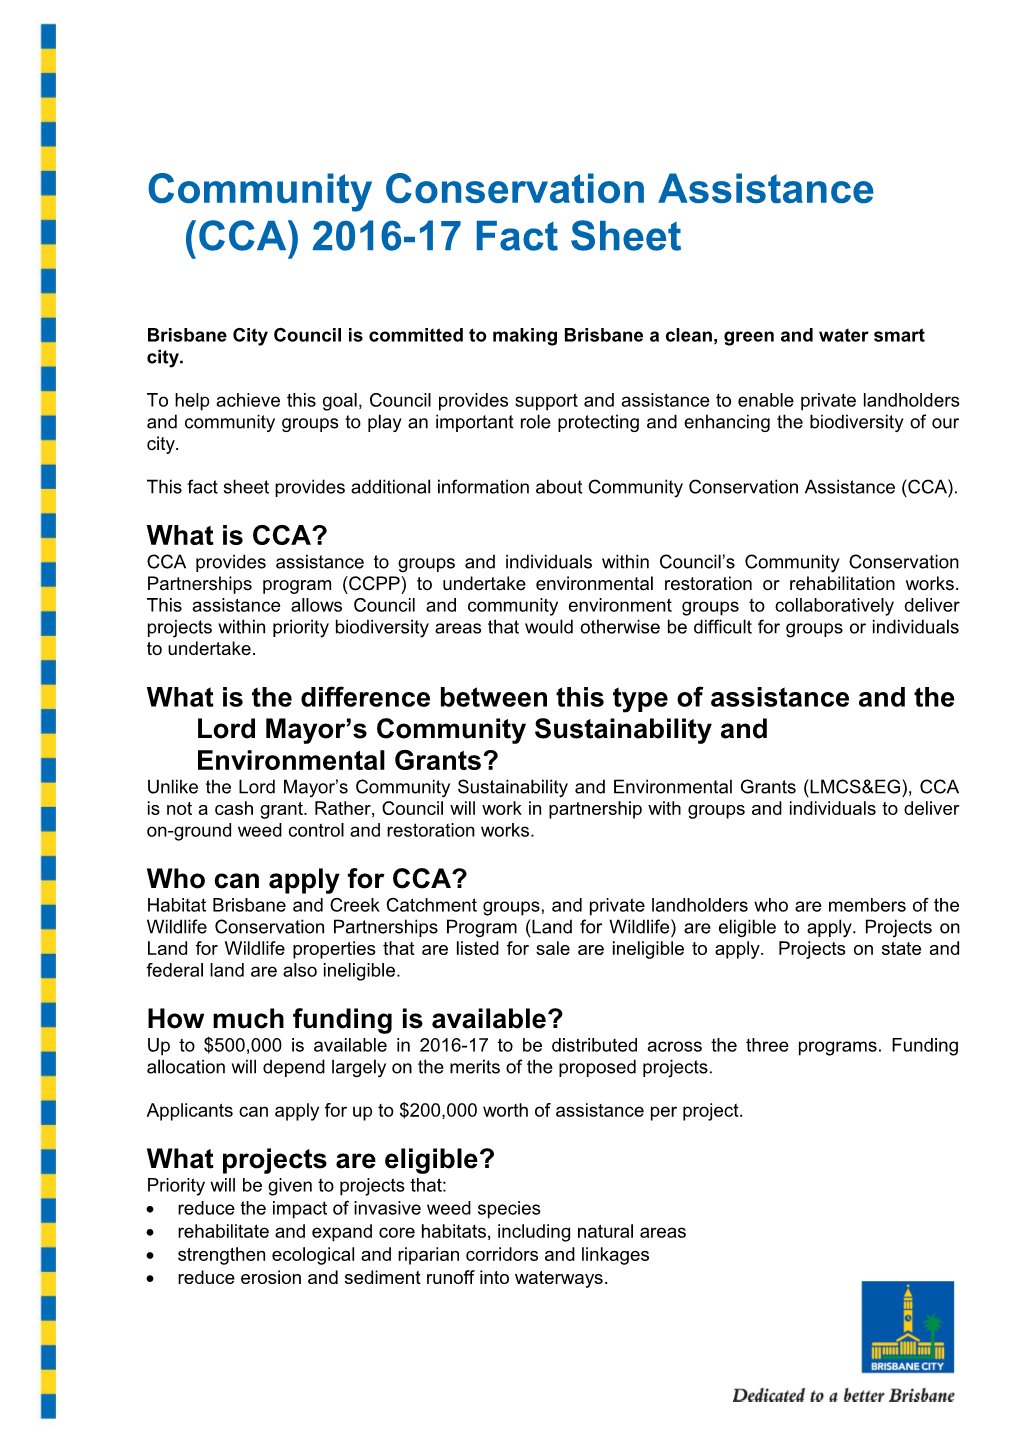 Community Conservation Assistance (CCA) 2016-17 Fact Sheet